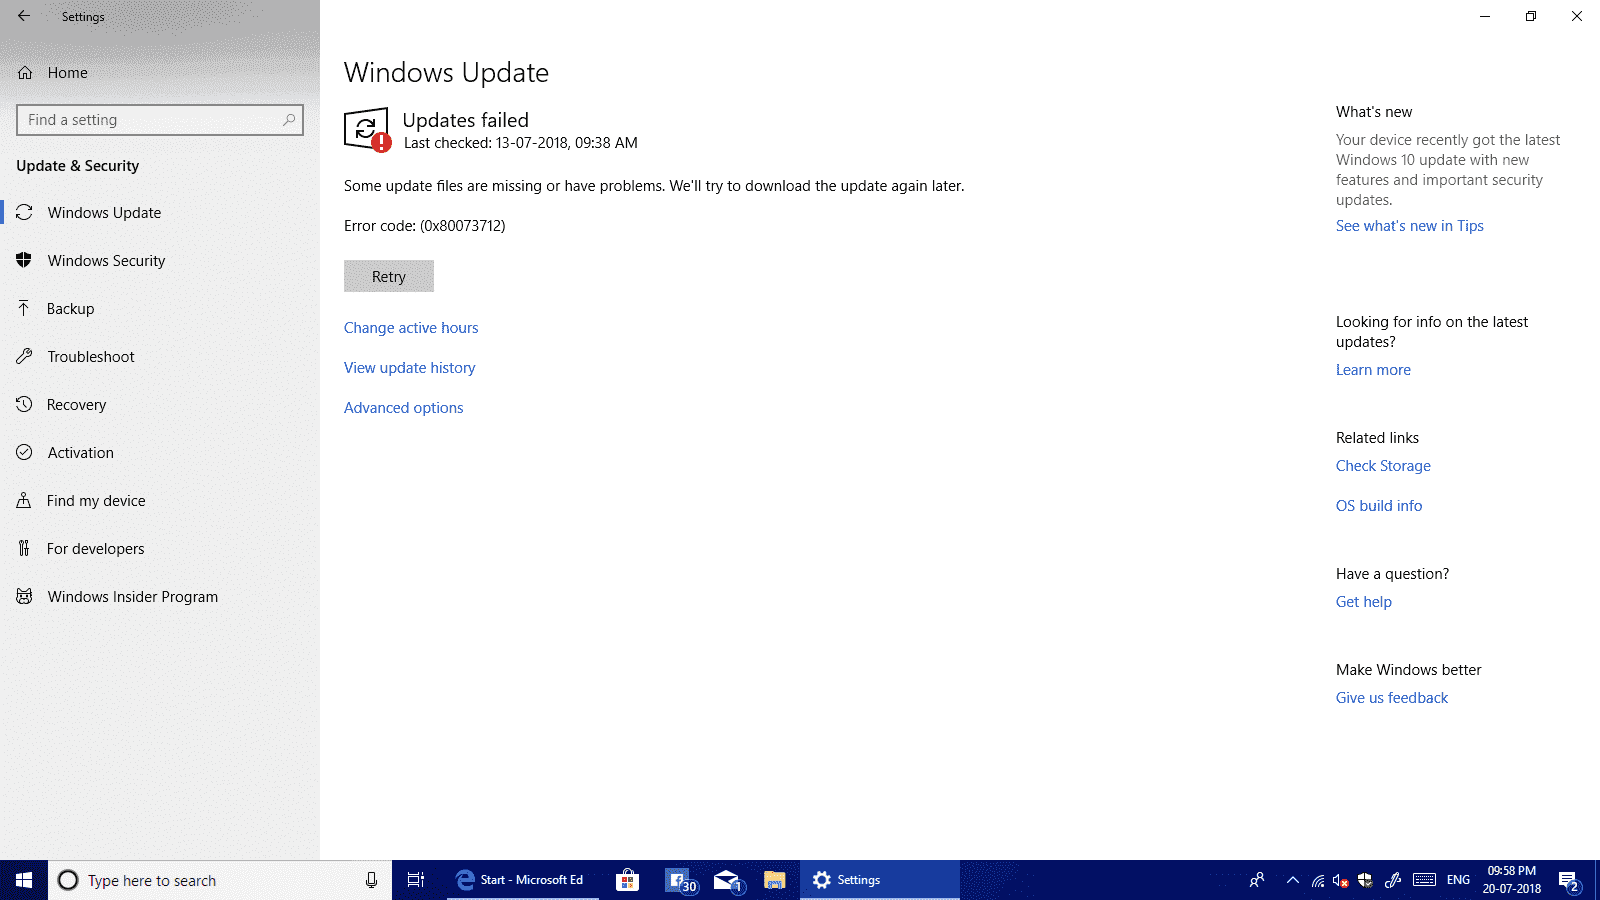 Windows Update Problem f4f2ec8d-e9d0-4577-b339-b0d7c25893f8?upload=true.png